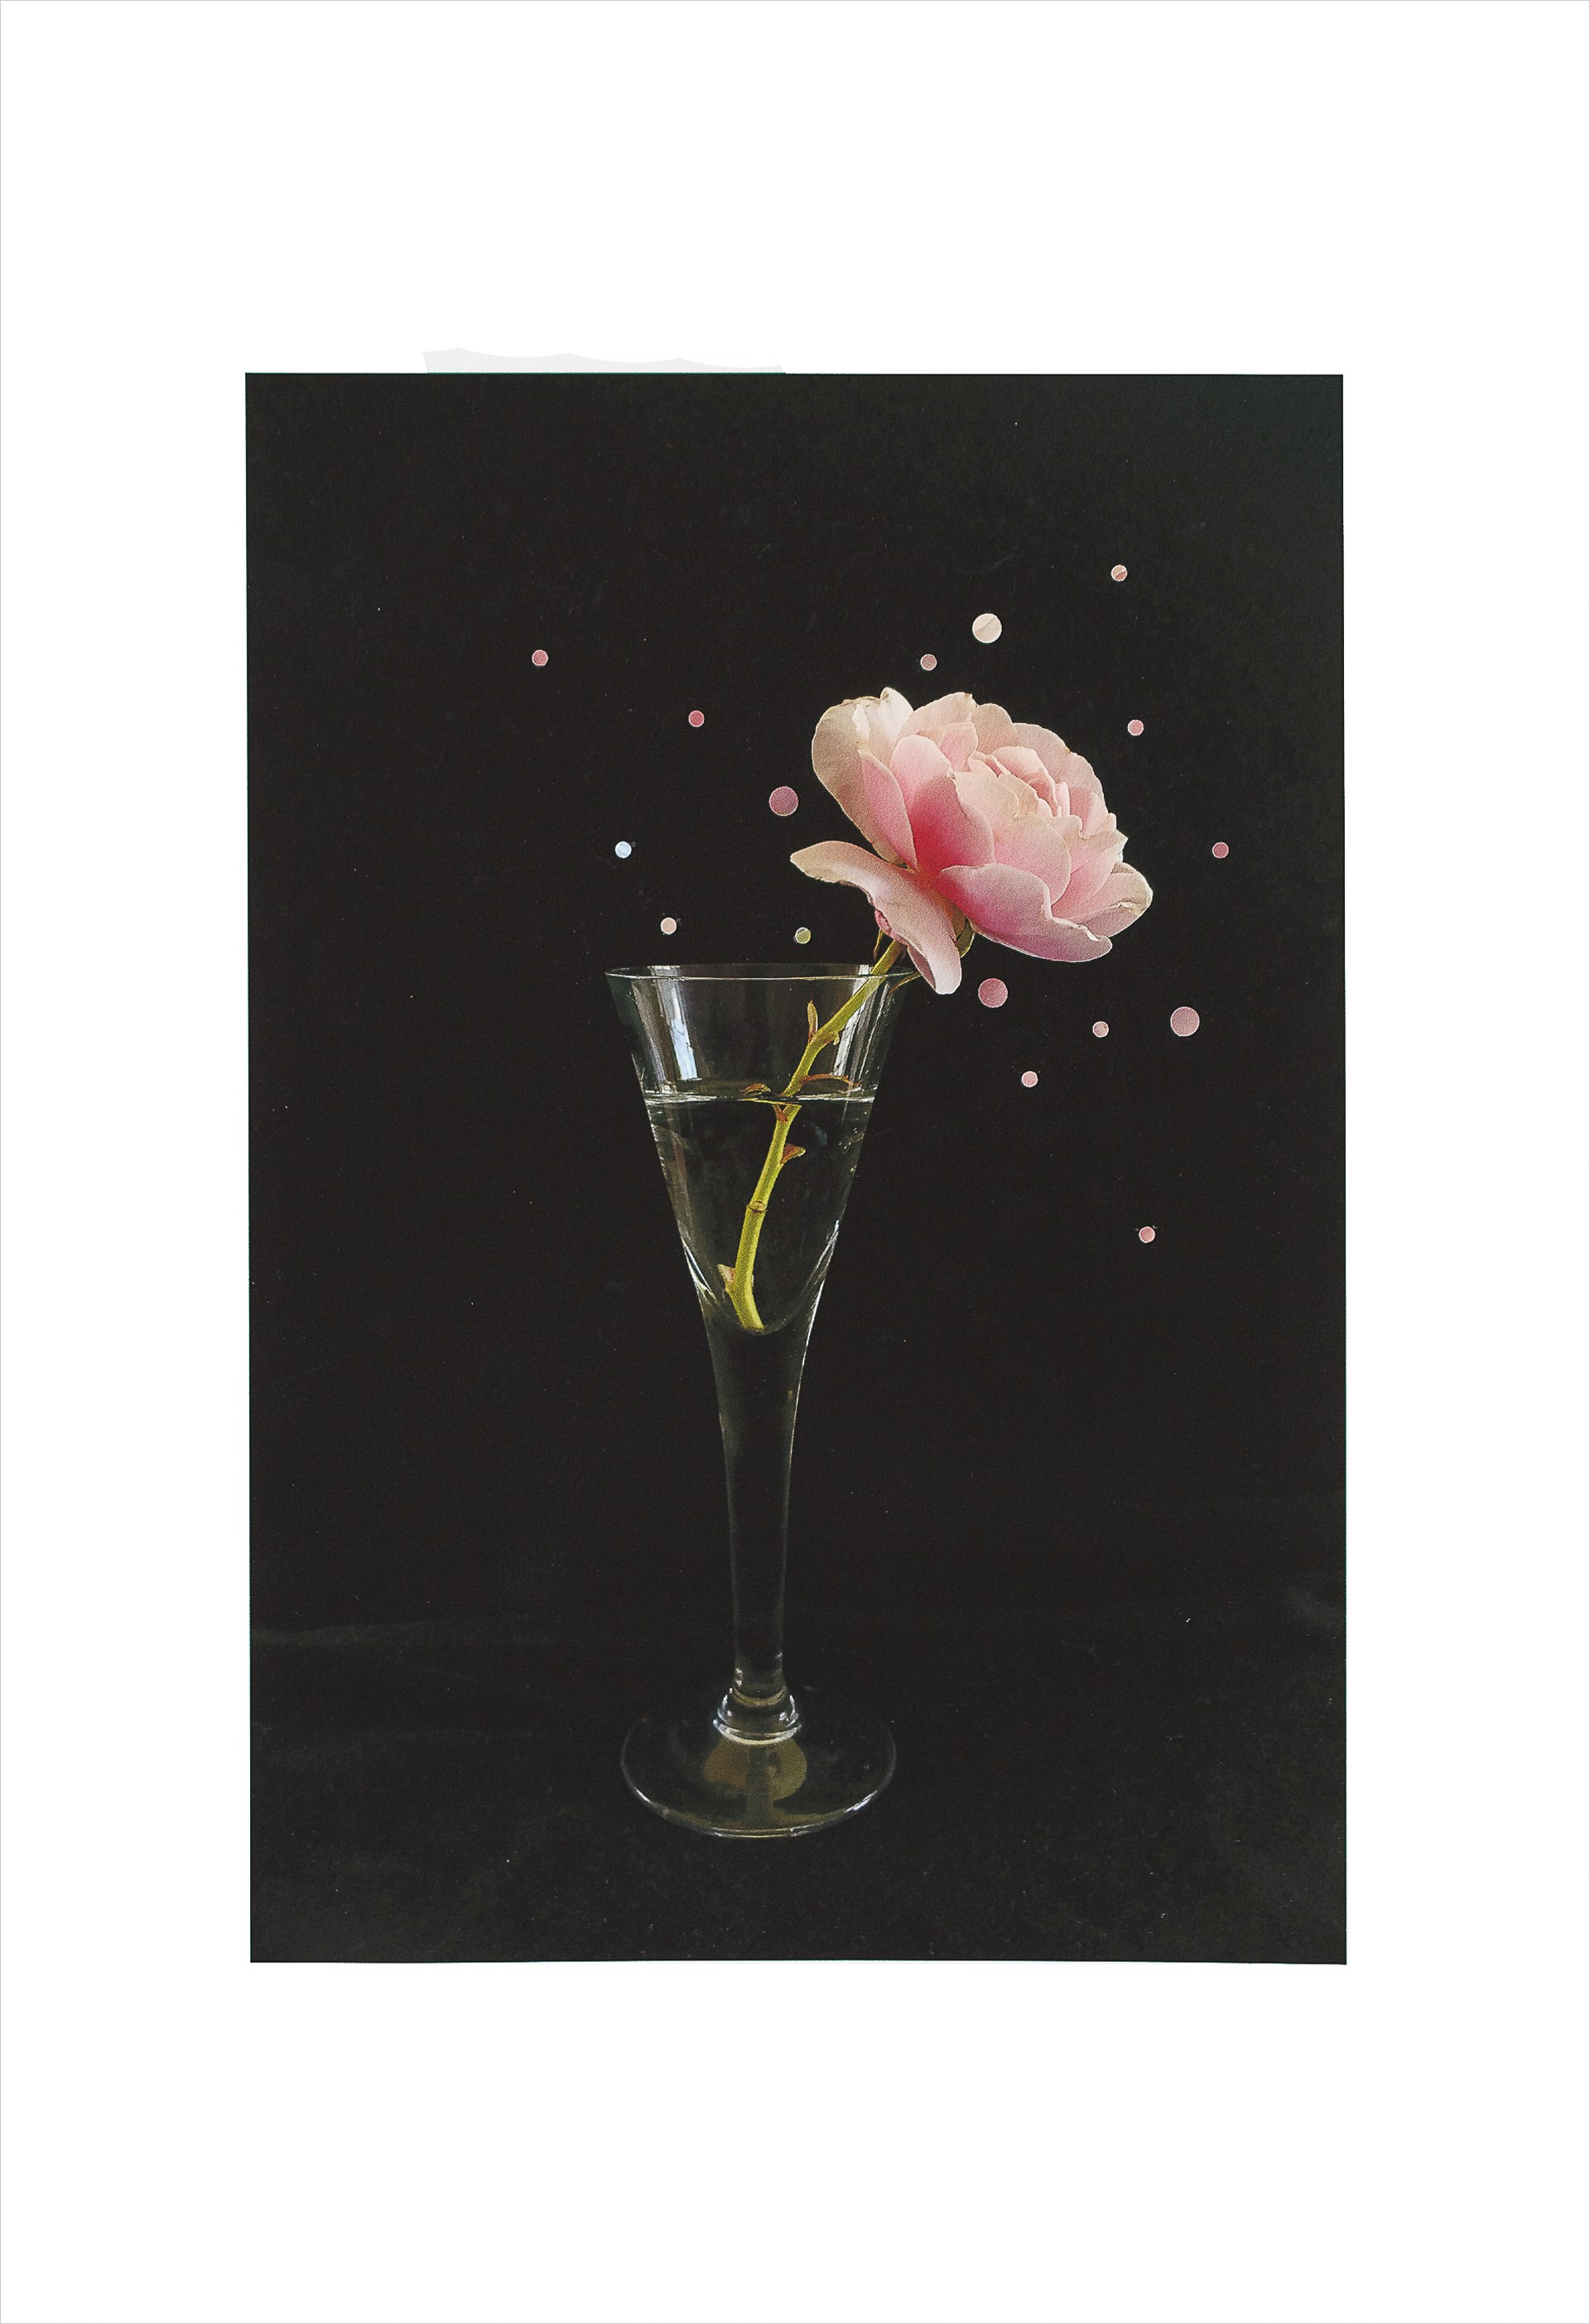 A Rose by Nathalie Seaver